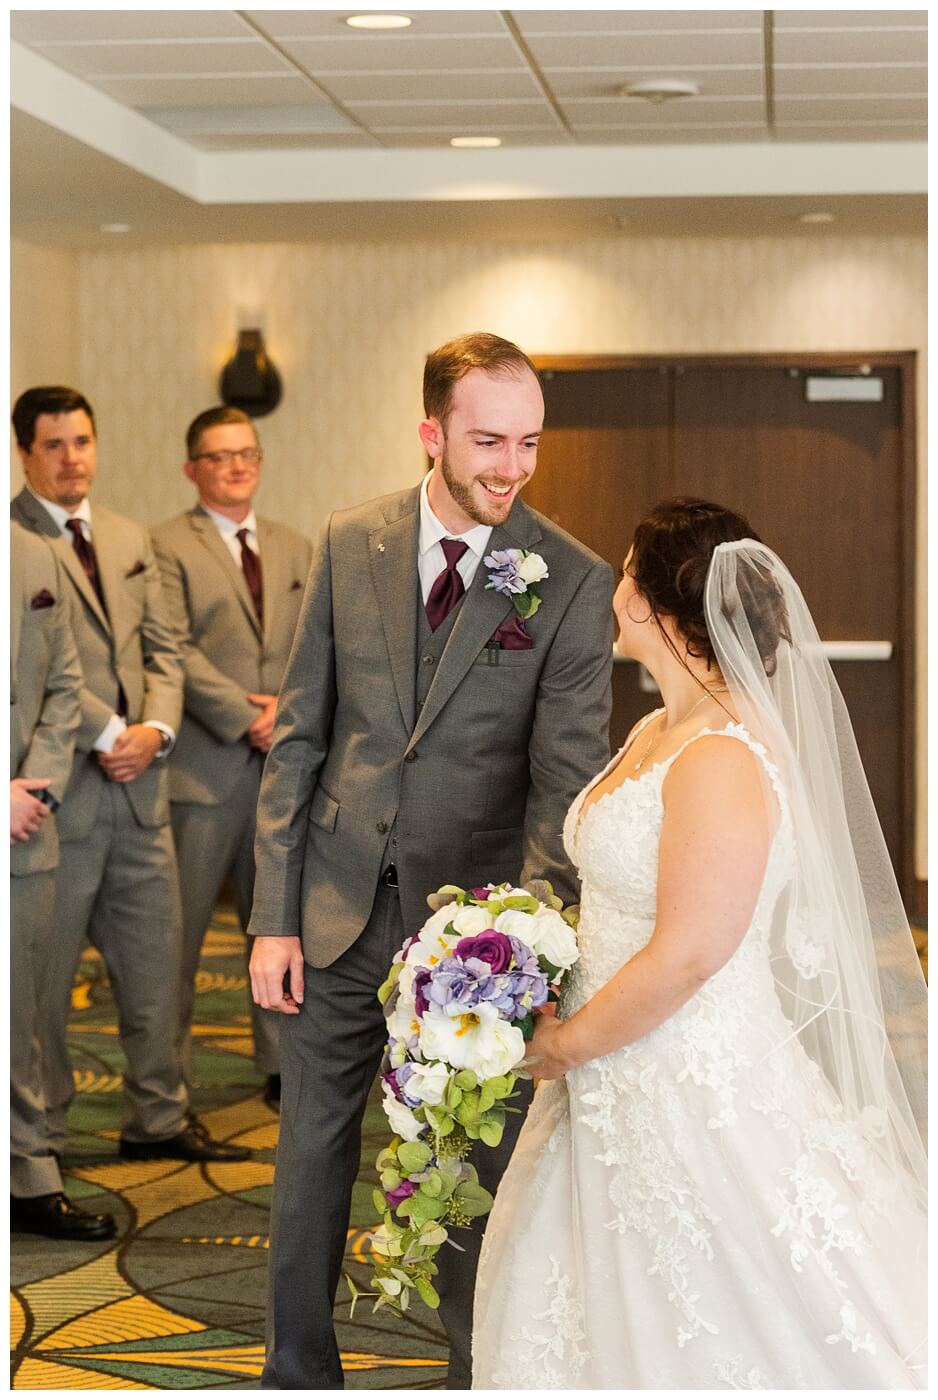 Andrew & Alisha - Regina Wedding Photography - 17 - Bride & Groom cannot take their eyes off each other